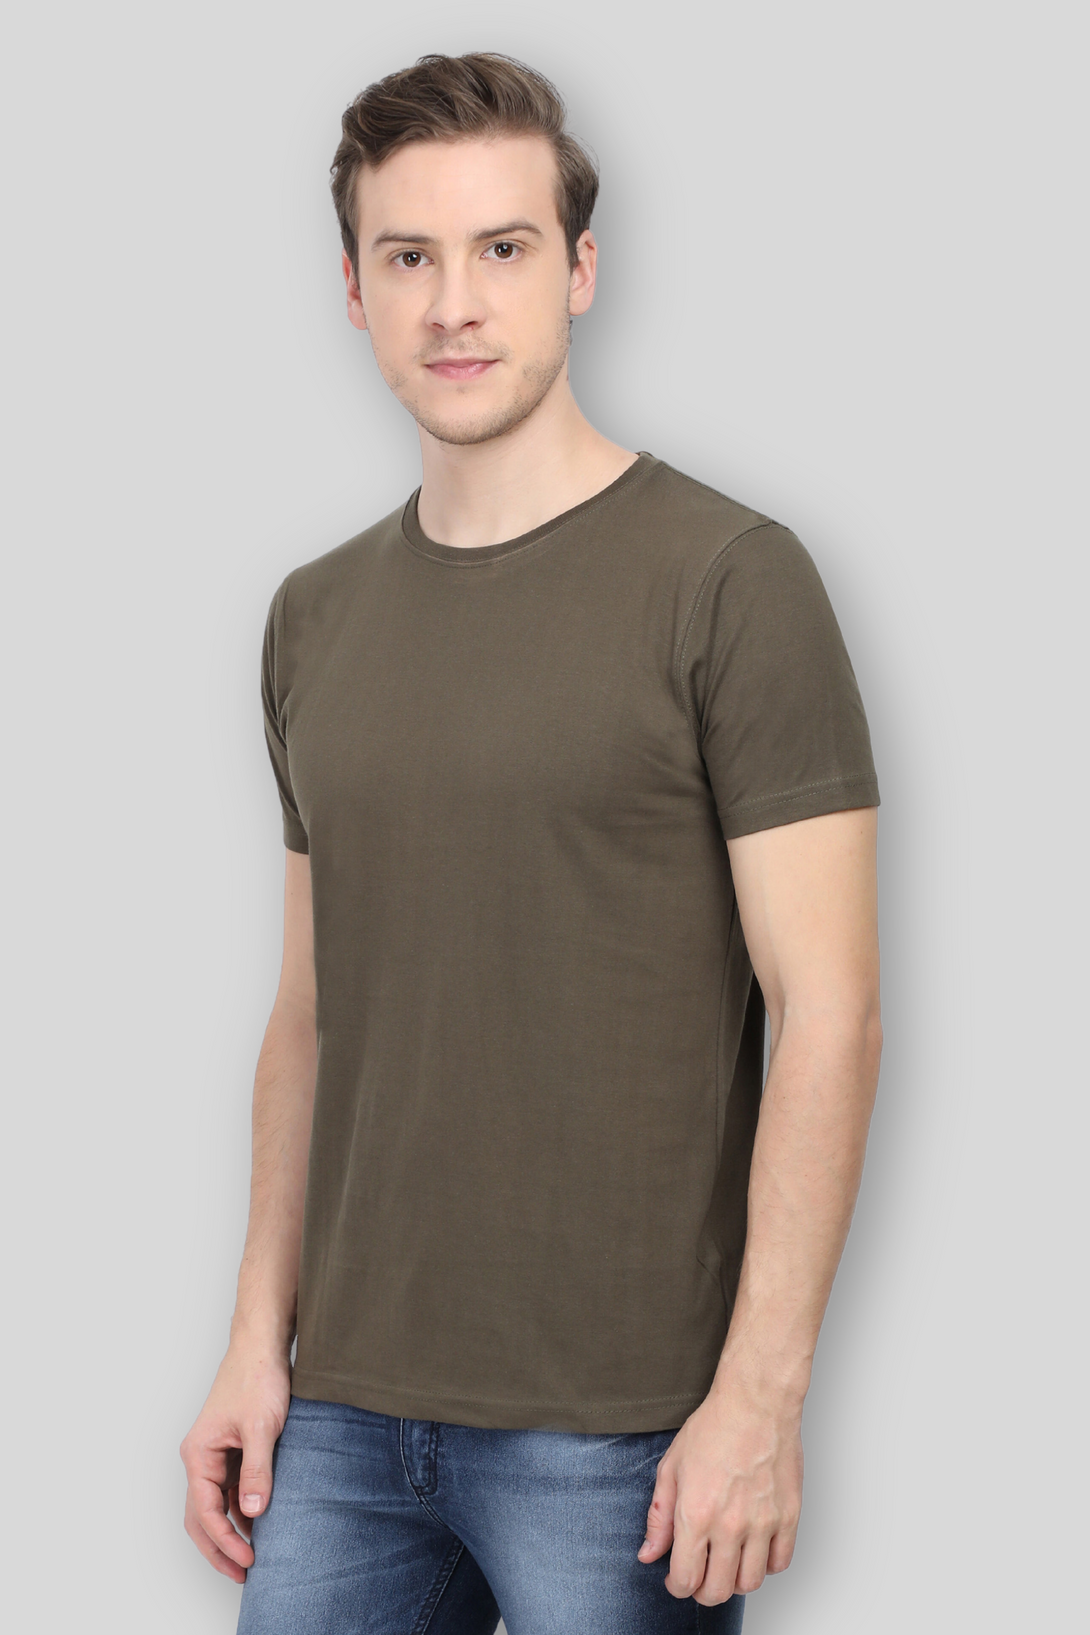 Olive Green T-Shirt For Men - WowWaves - 1